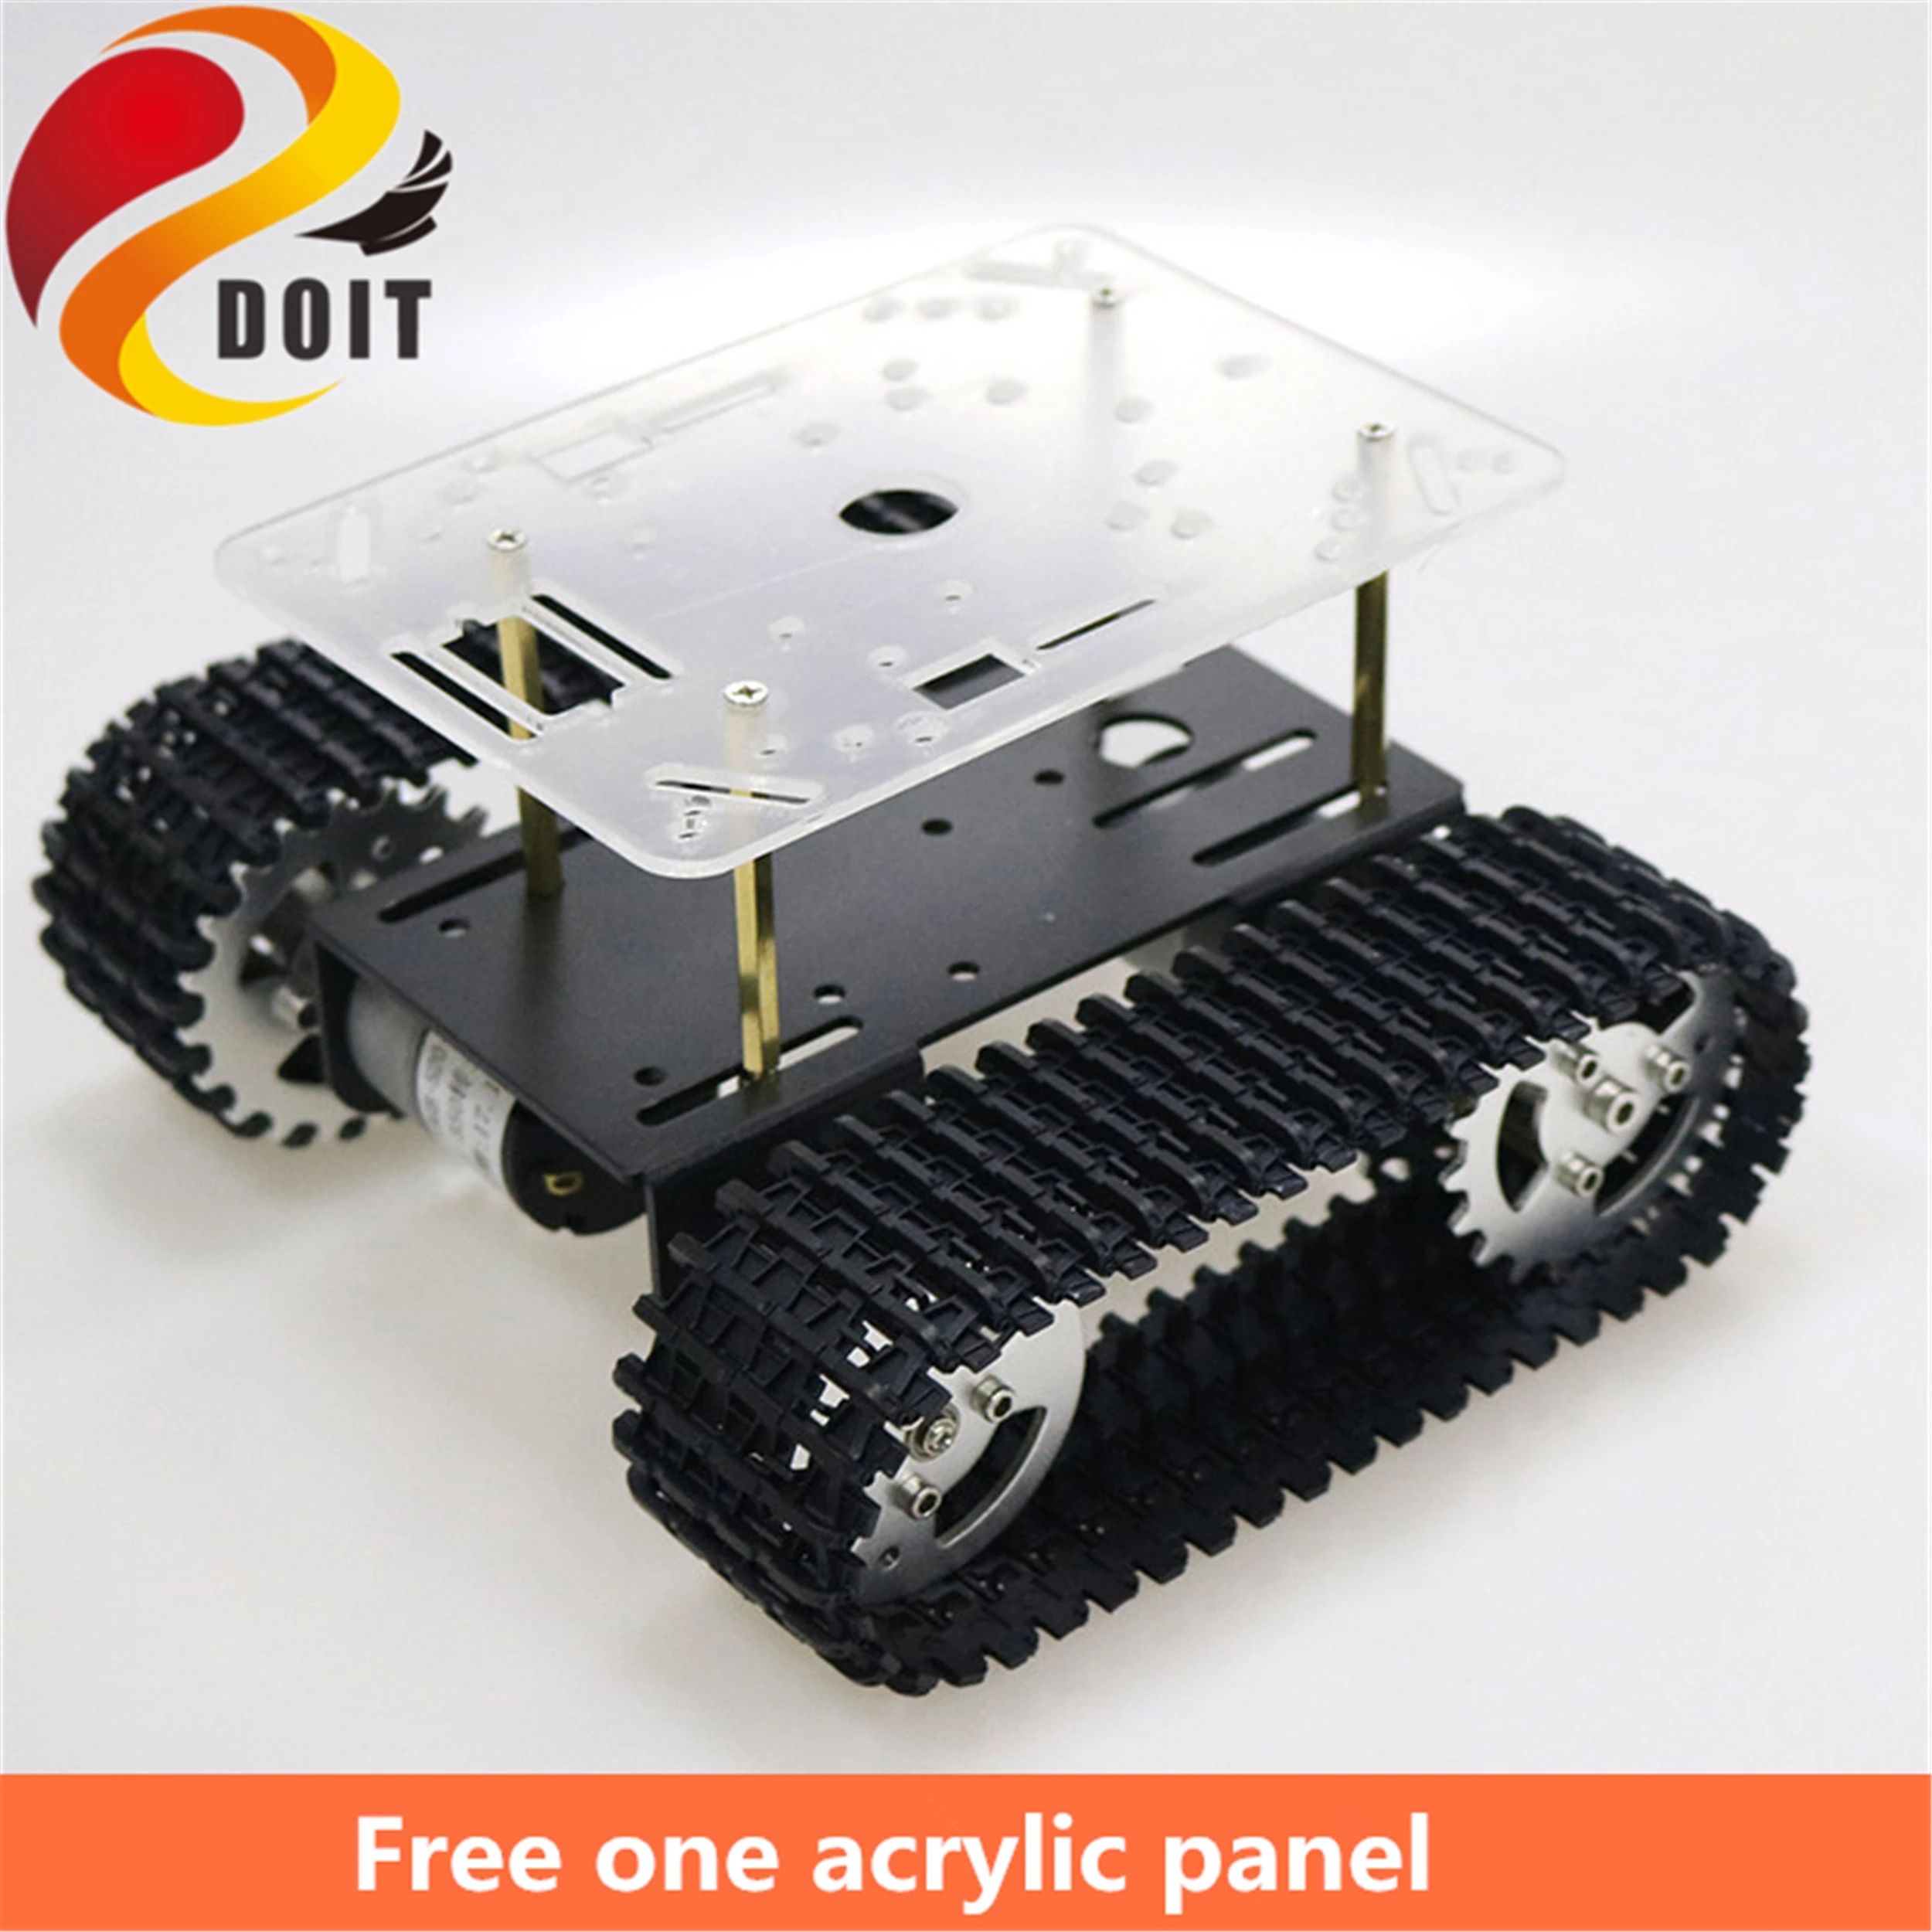 

SZDOIT T101 Metal Smart Robot Tank Chassis Kit Tracked Crawler Robotic Platform Unassembled DIY For Arduino Free Acrylic Panel